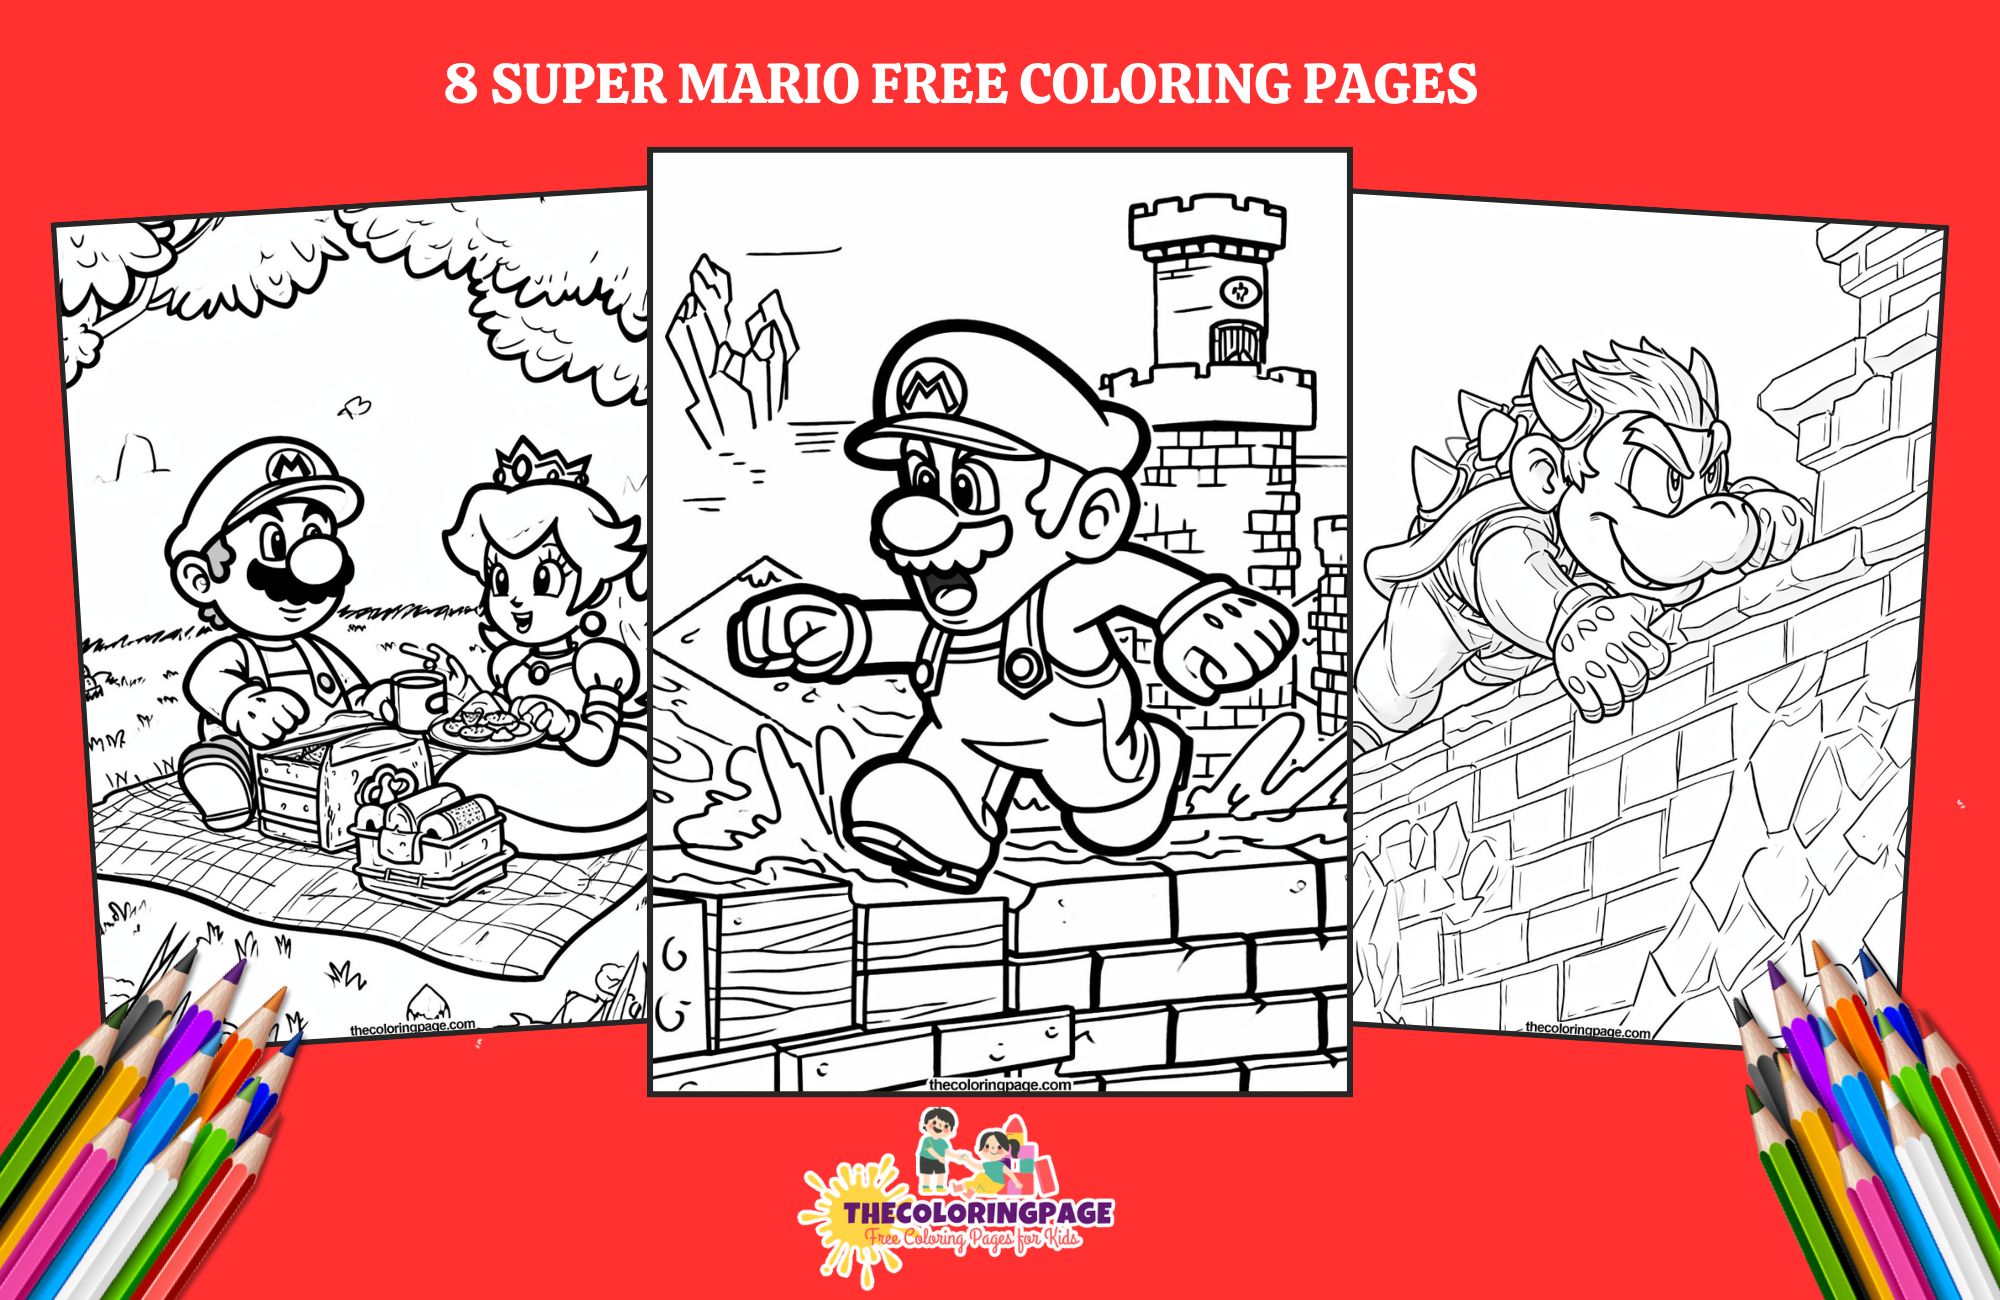 Explore Mario's World 8 Free Super Mario Coloring Pages